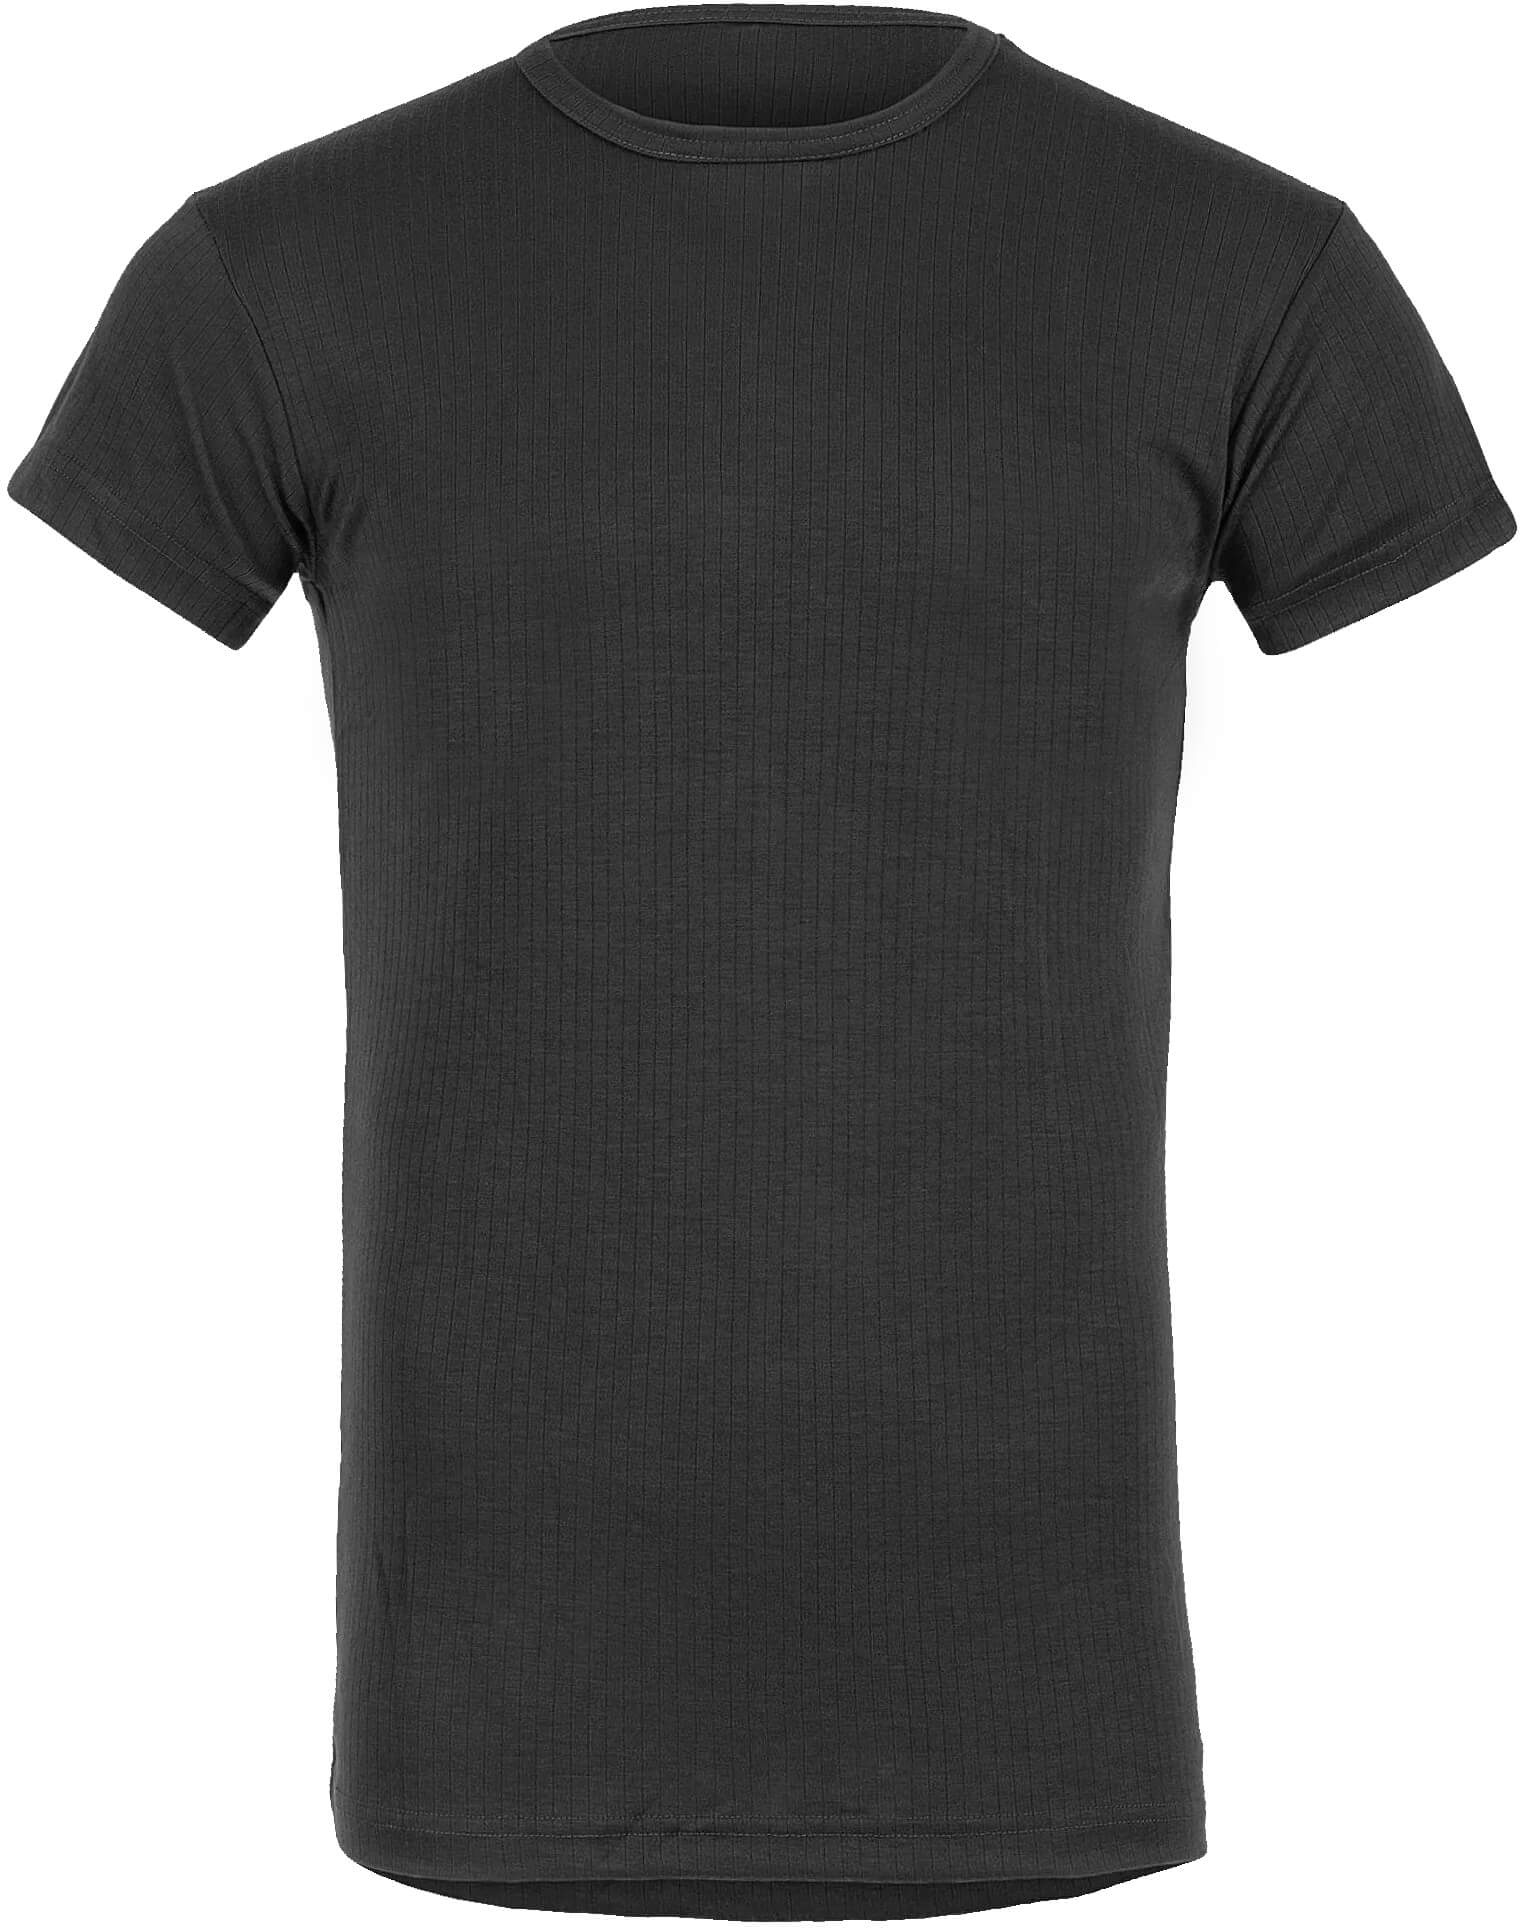 Highlander Thermal Unterhemd kurzarm (Sale) schwarz, Größe S